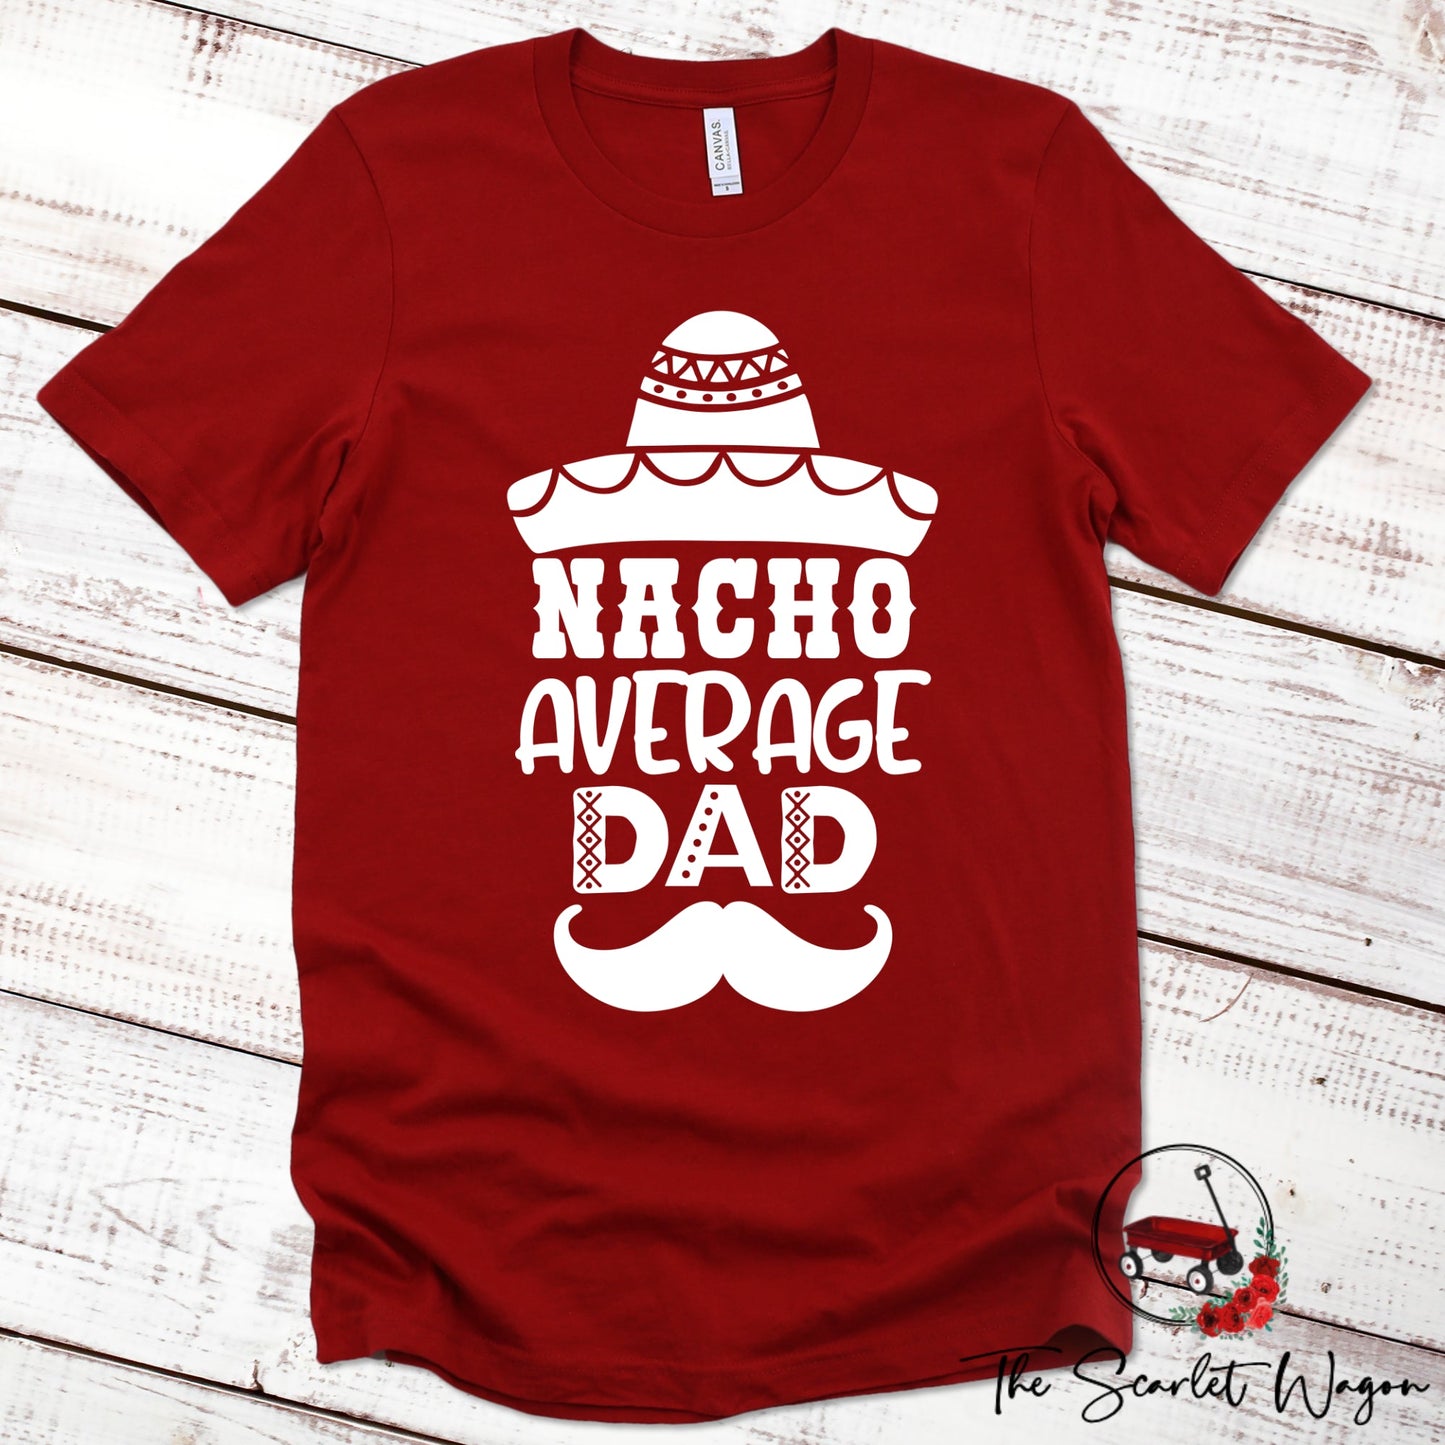 Nacho Average Dad Premium Tee Scarlet Wagon Red XS 